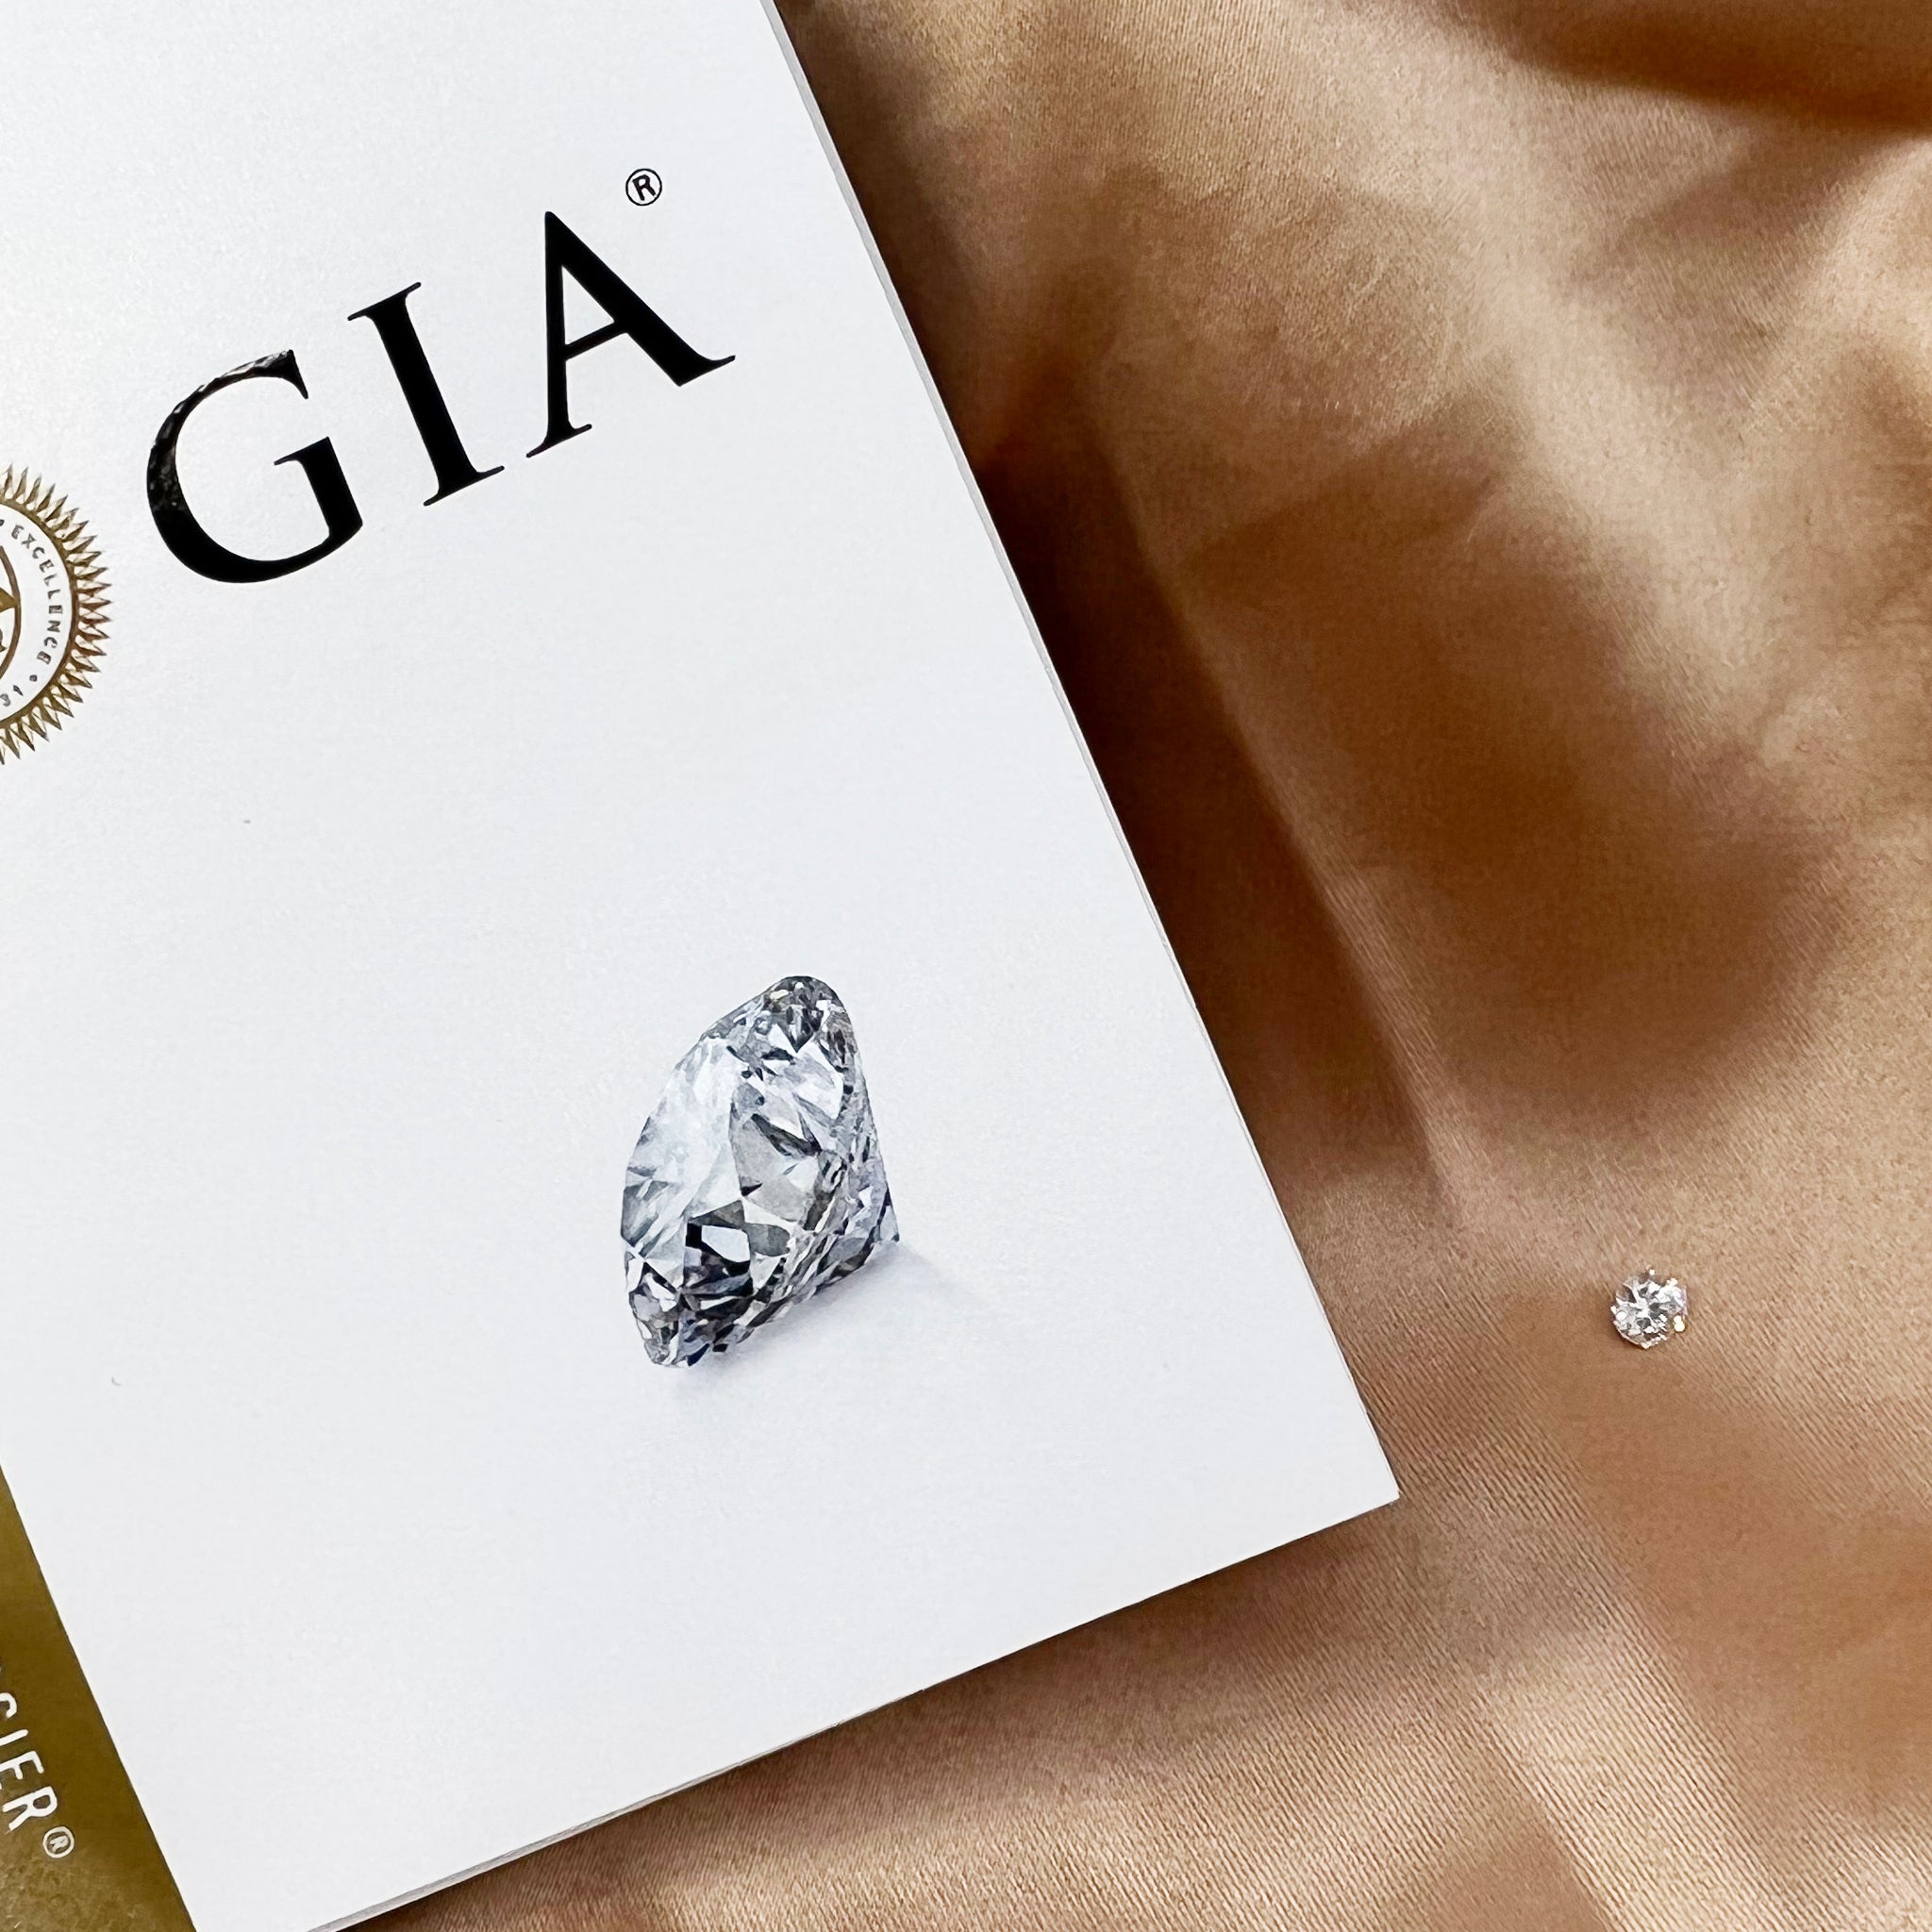 Guaranteed Authentic GIA Loose Diamond  0.5 Carat Round Natural Diamond 0.5/F/VS1 with GIA Certification